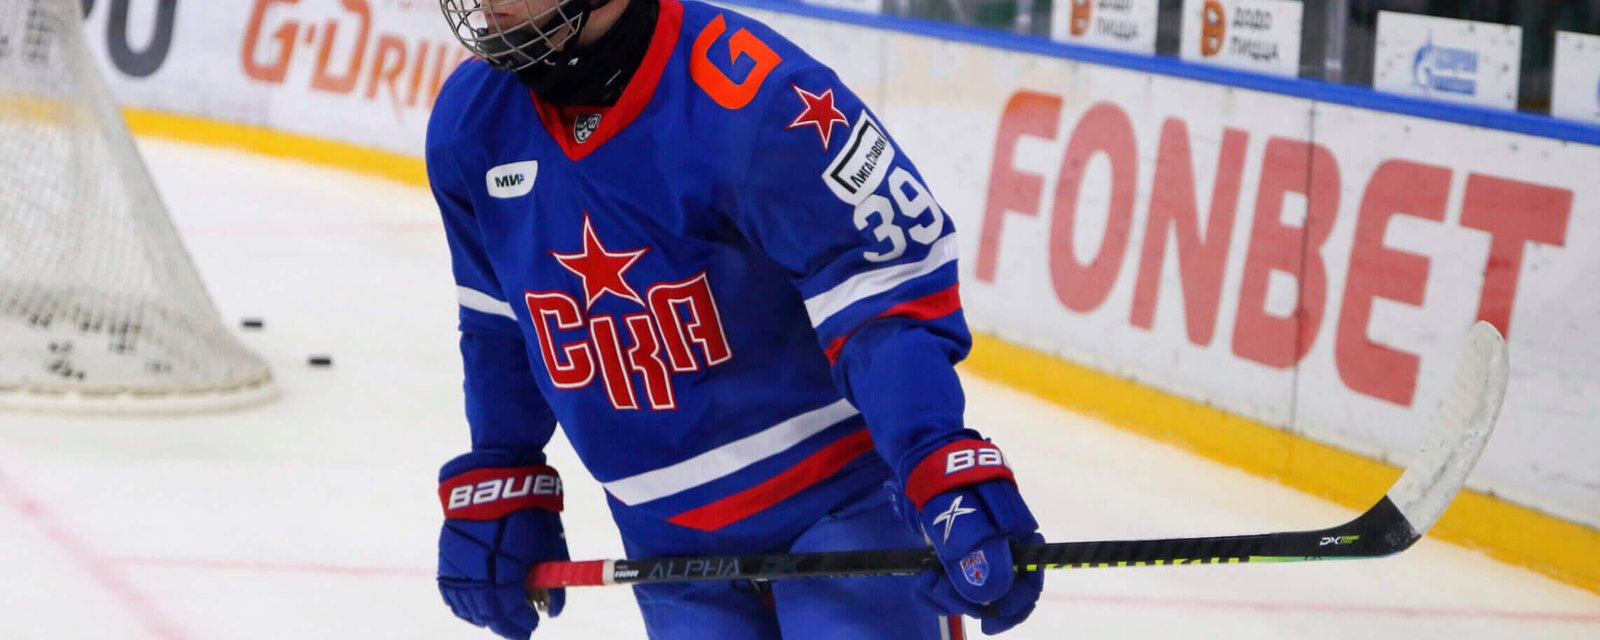 Ça commence mal pour Matvei Michkov dans la KHL